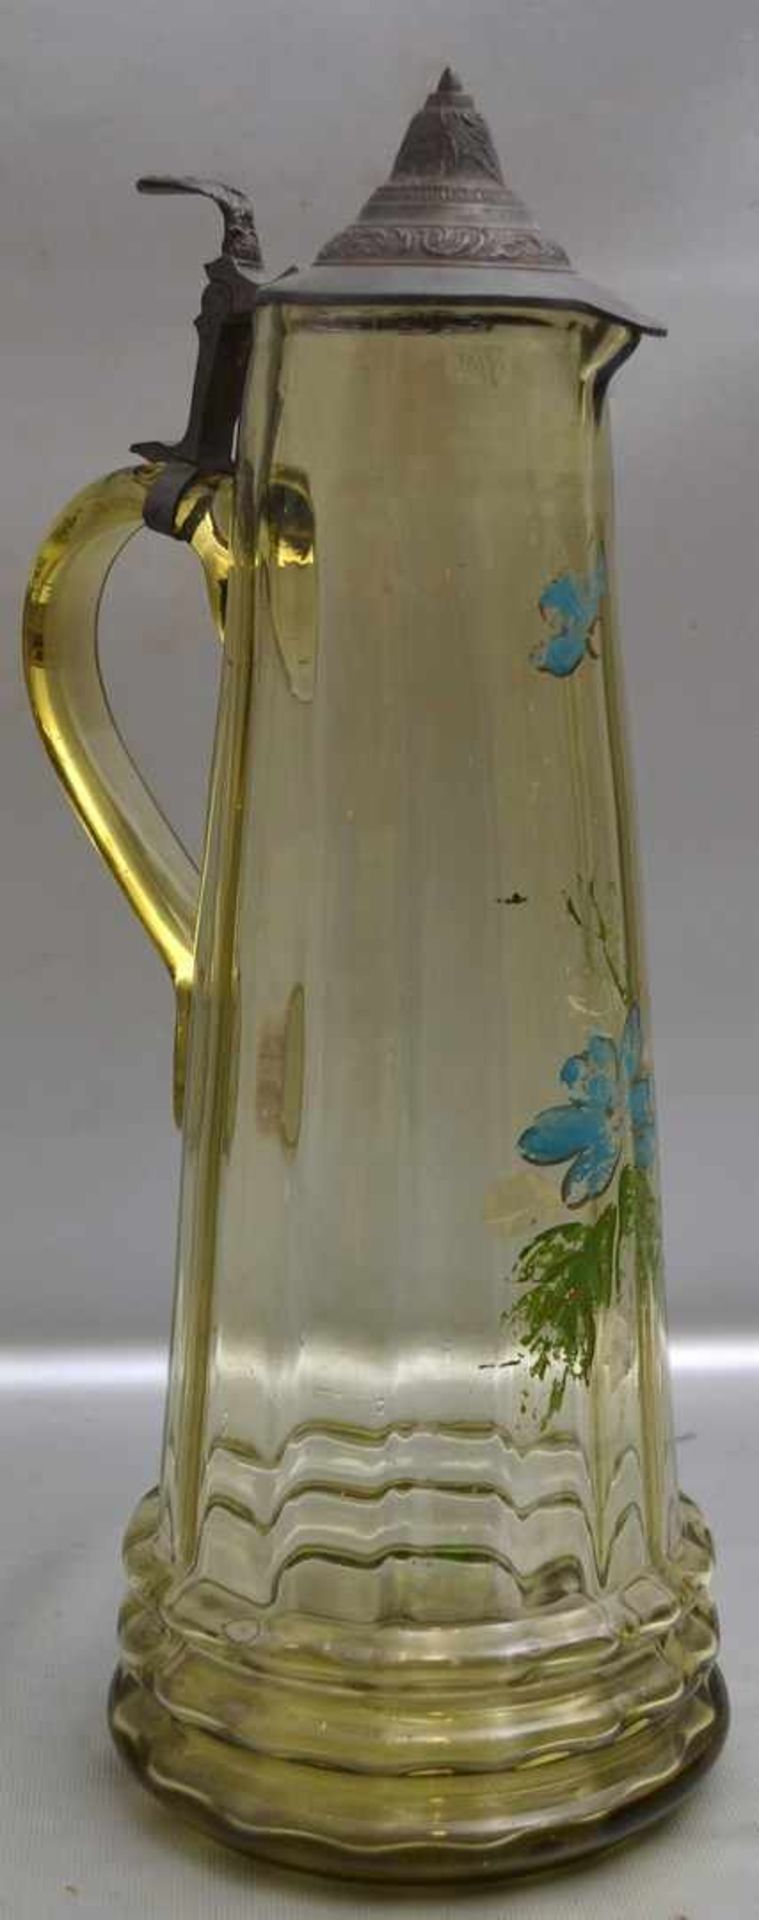 Saftkrug grünes Glas, mit bunter Bemalung, Zinndeckel, H 37 cm, um 1880